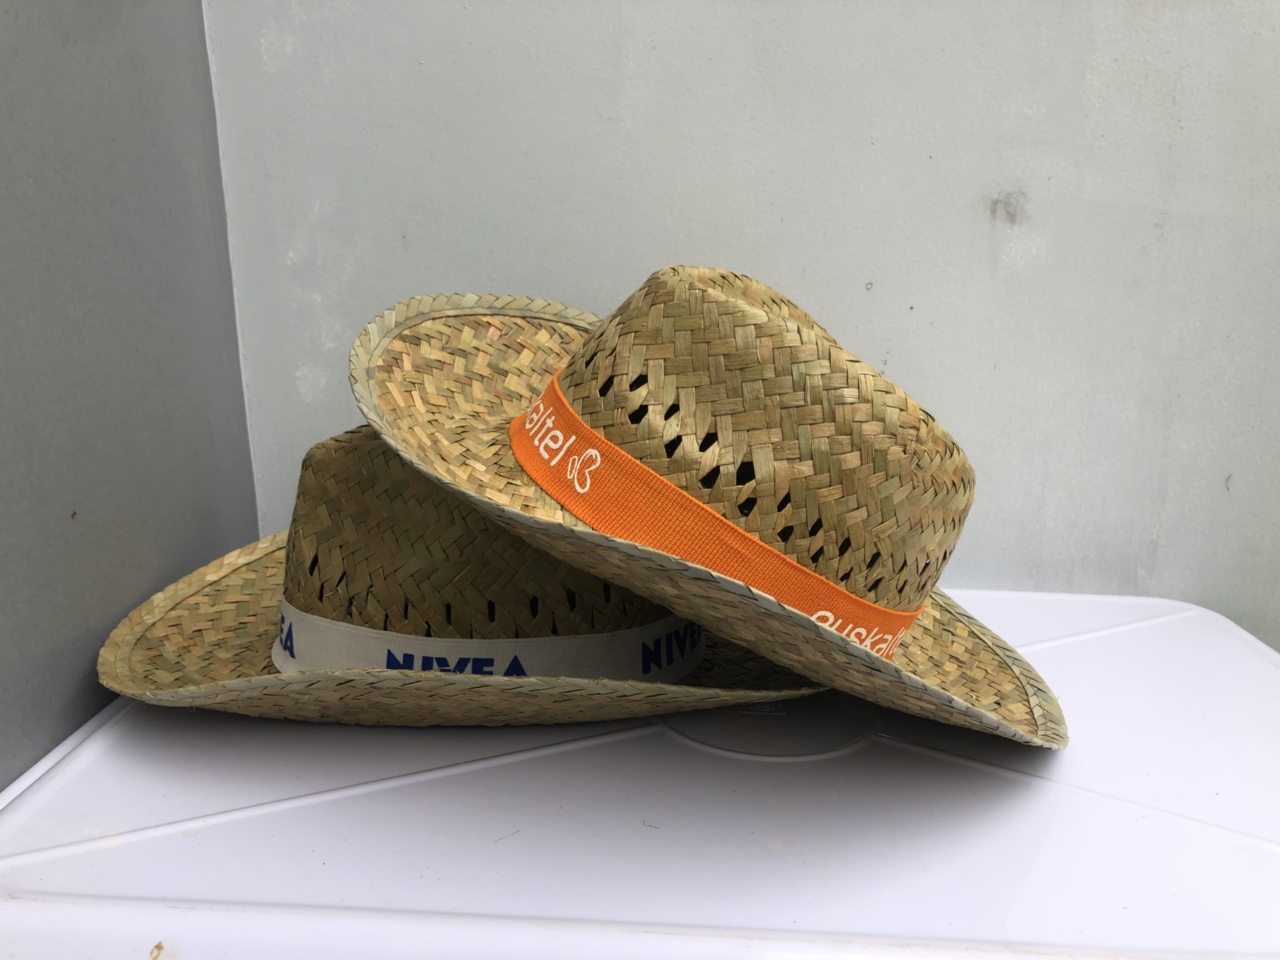 Seagrass Hat Handmade